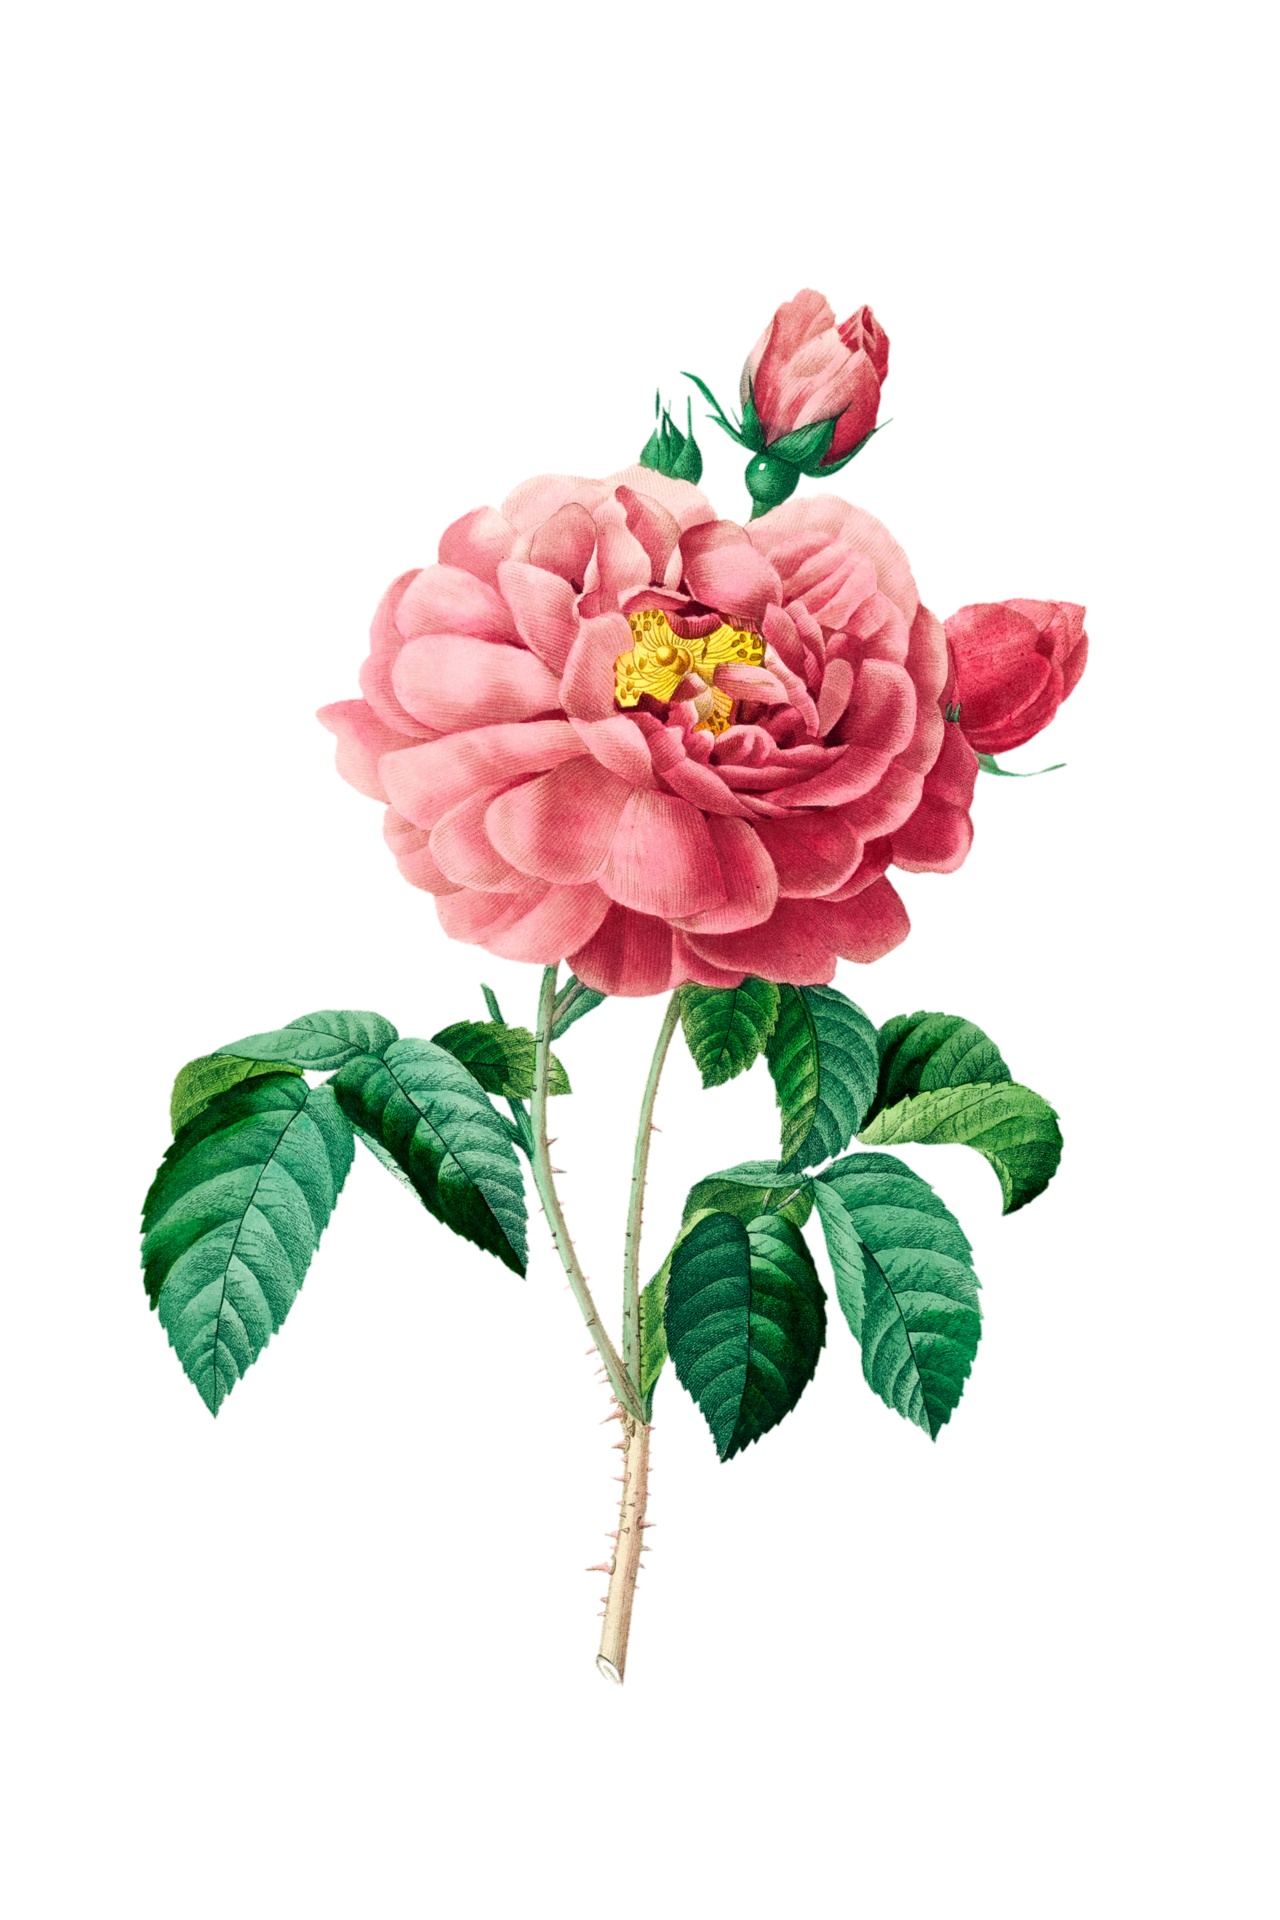 Vintage Illustration Flower Rose Free Stock Photo - Public Domain Pictures